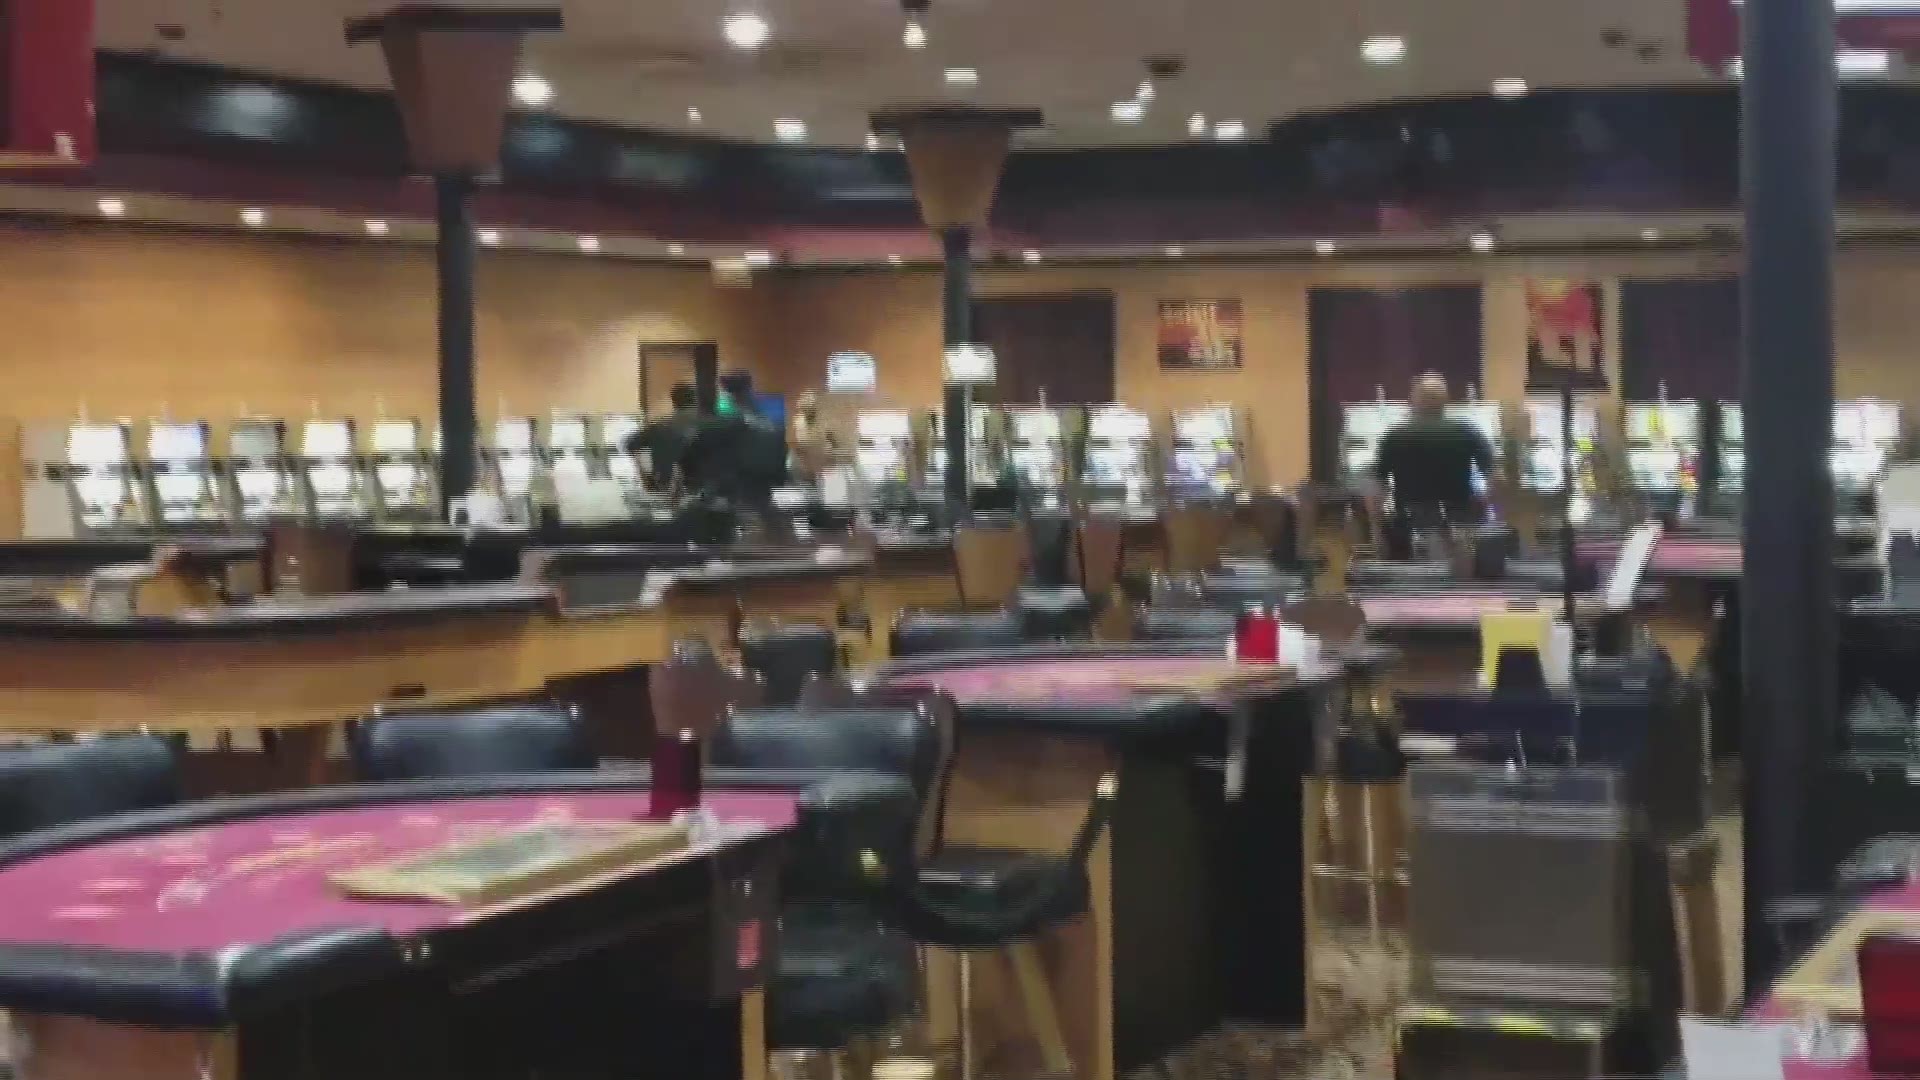 Drunken, naked man wrangled after disturbance at Louisiana casino